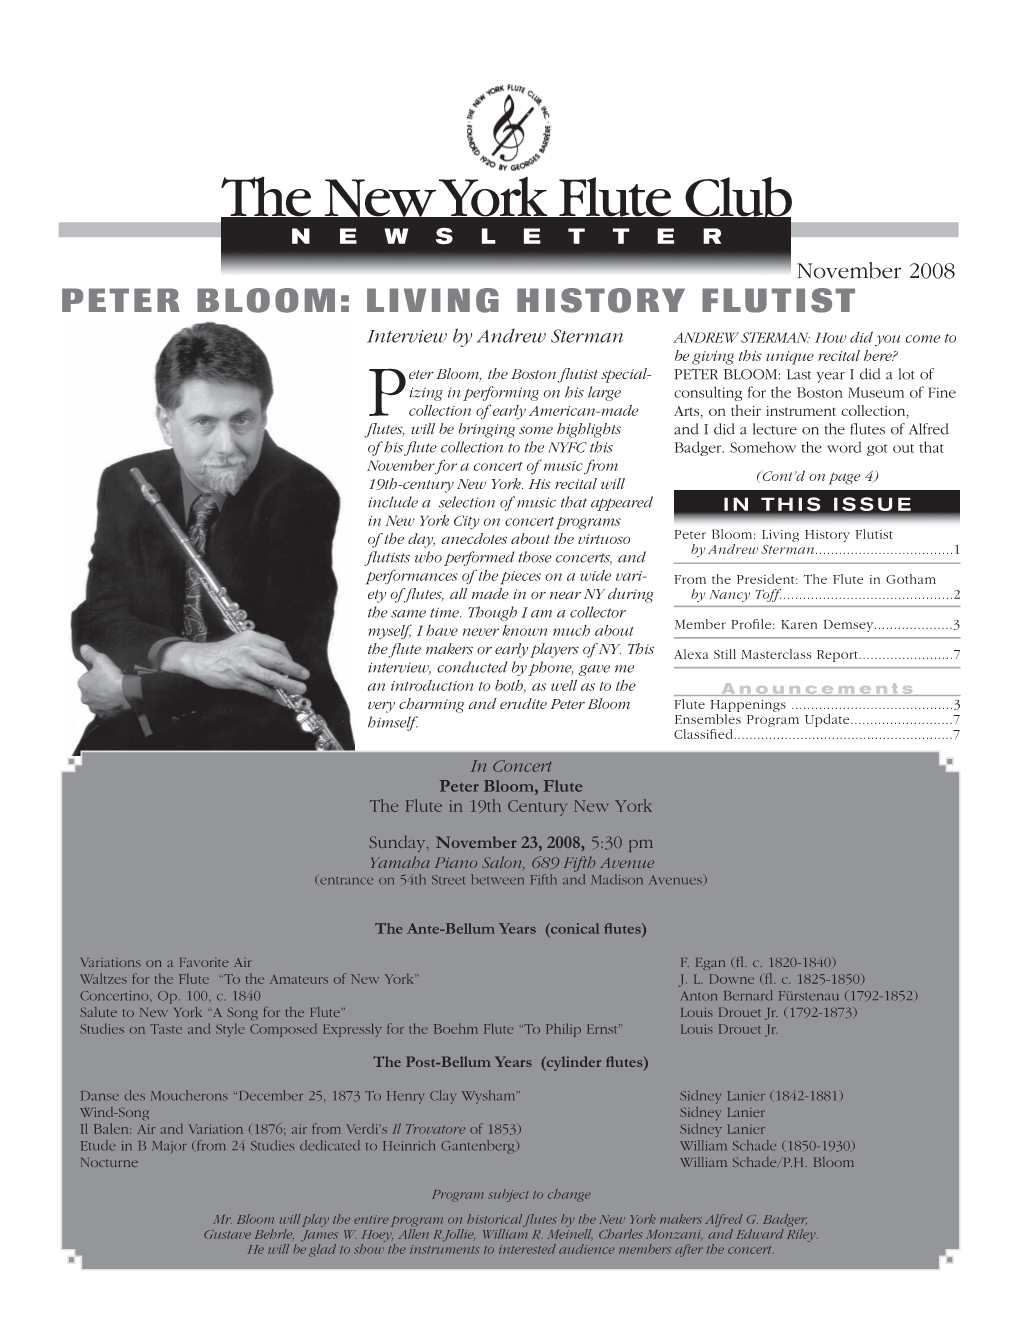 Peter Bloom: Living History Flutist